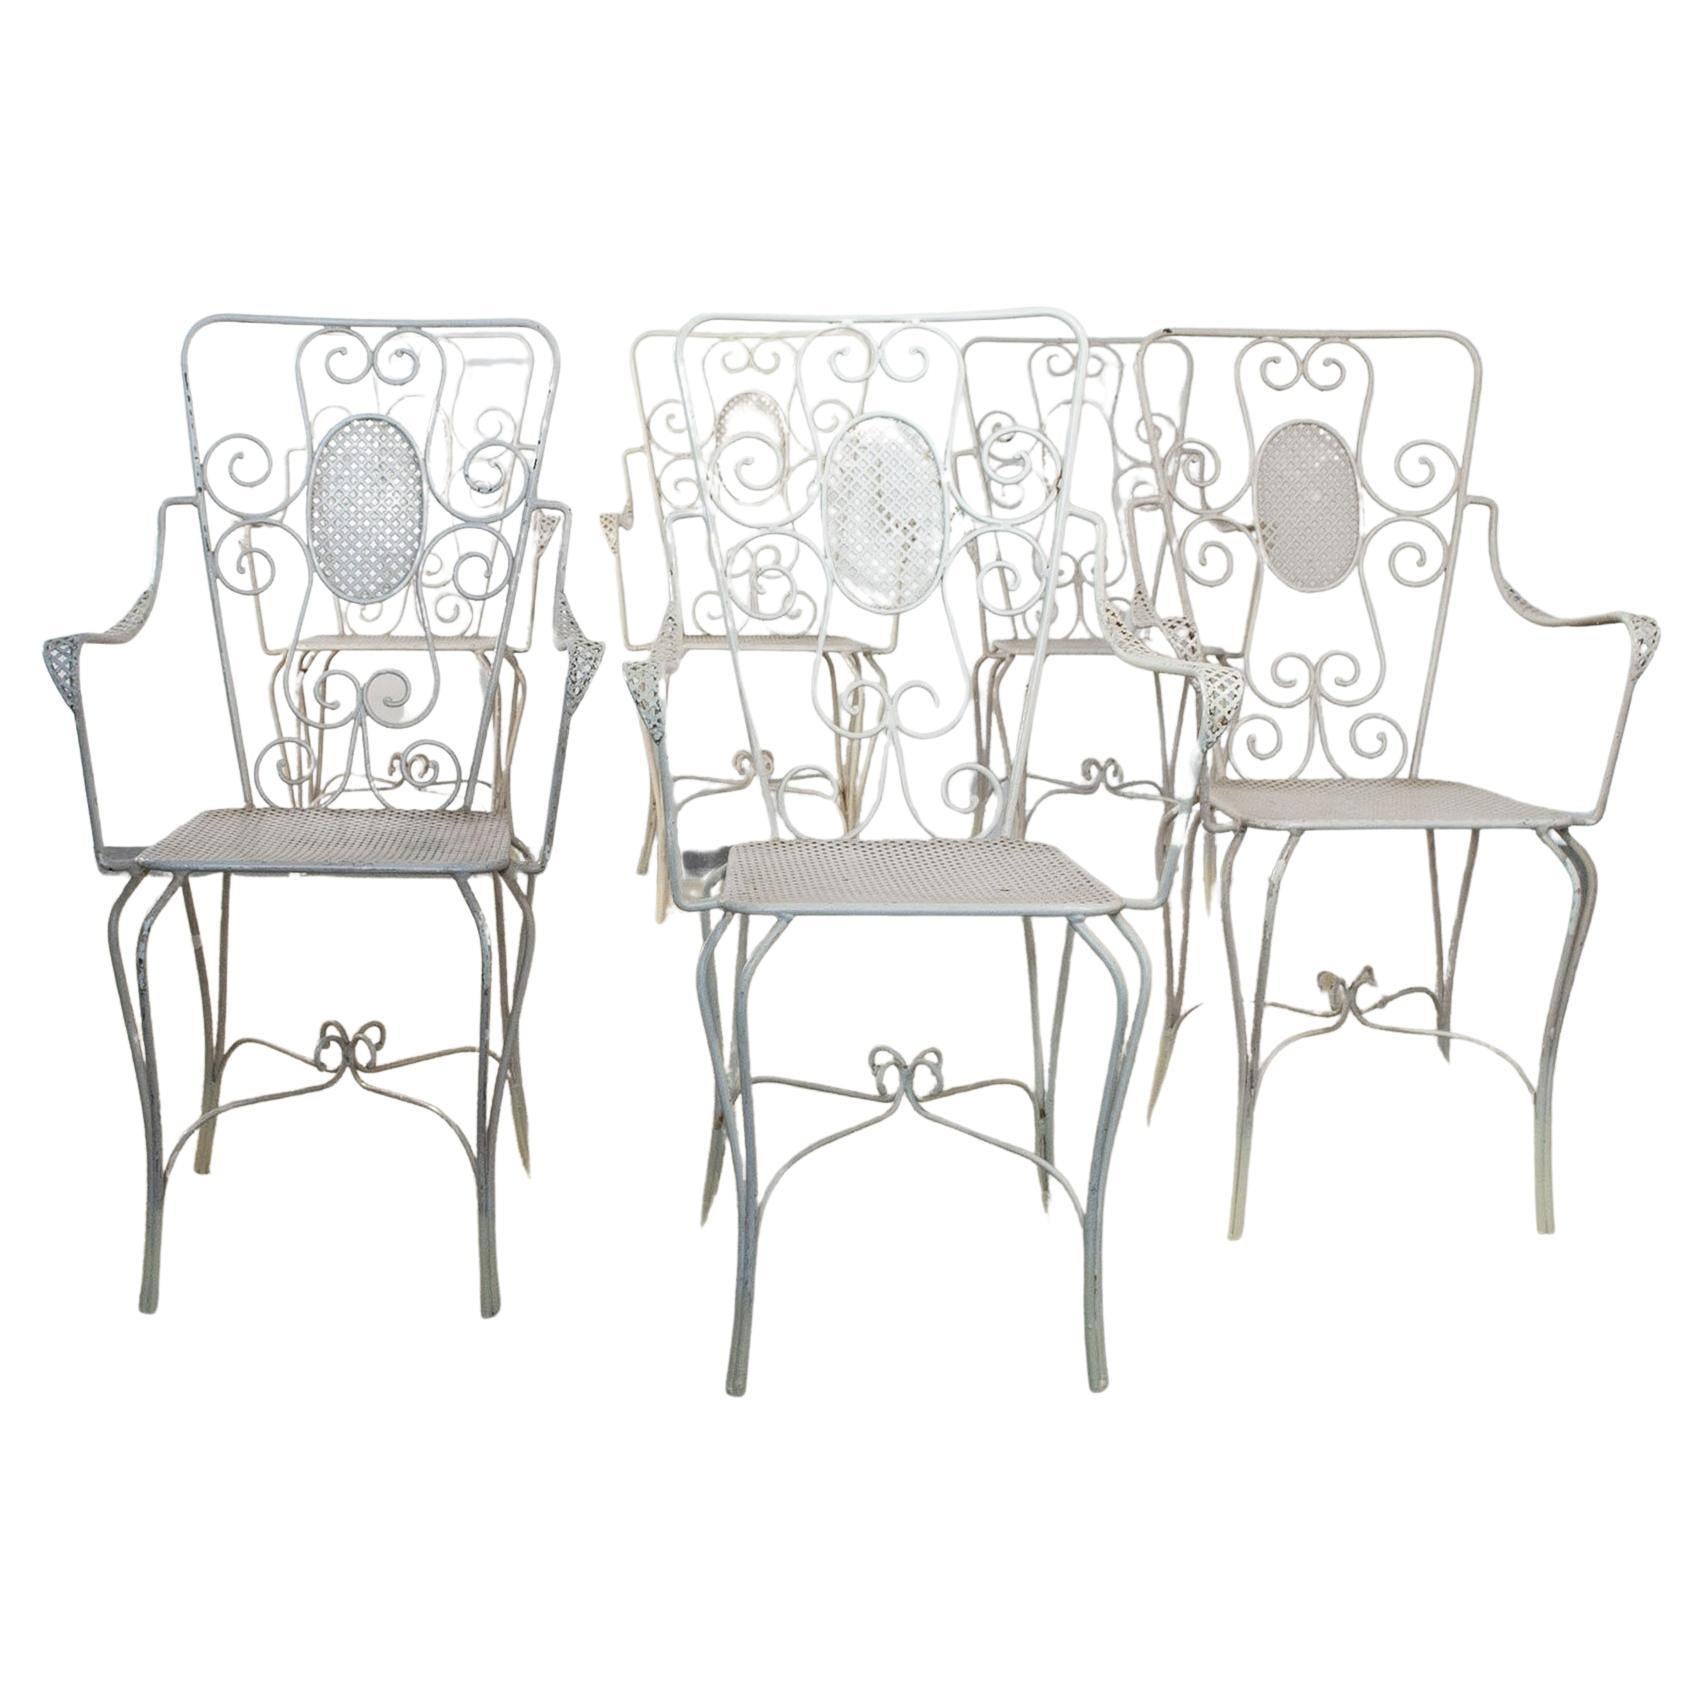 Casa e giardino, six chaises en métal peint en blanc, 1942